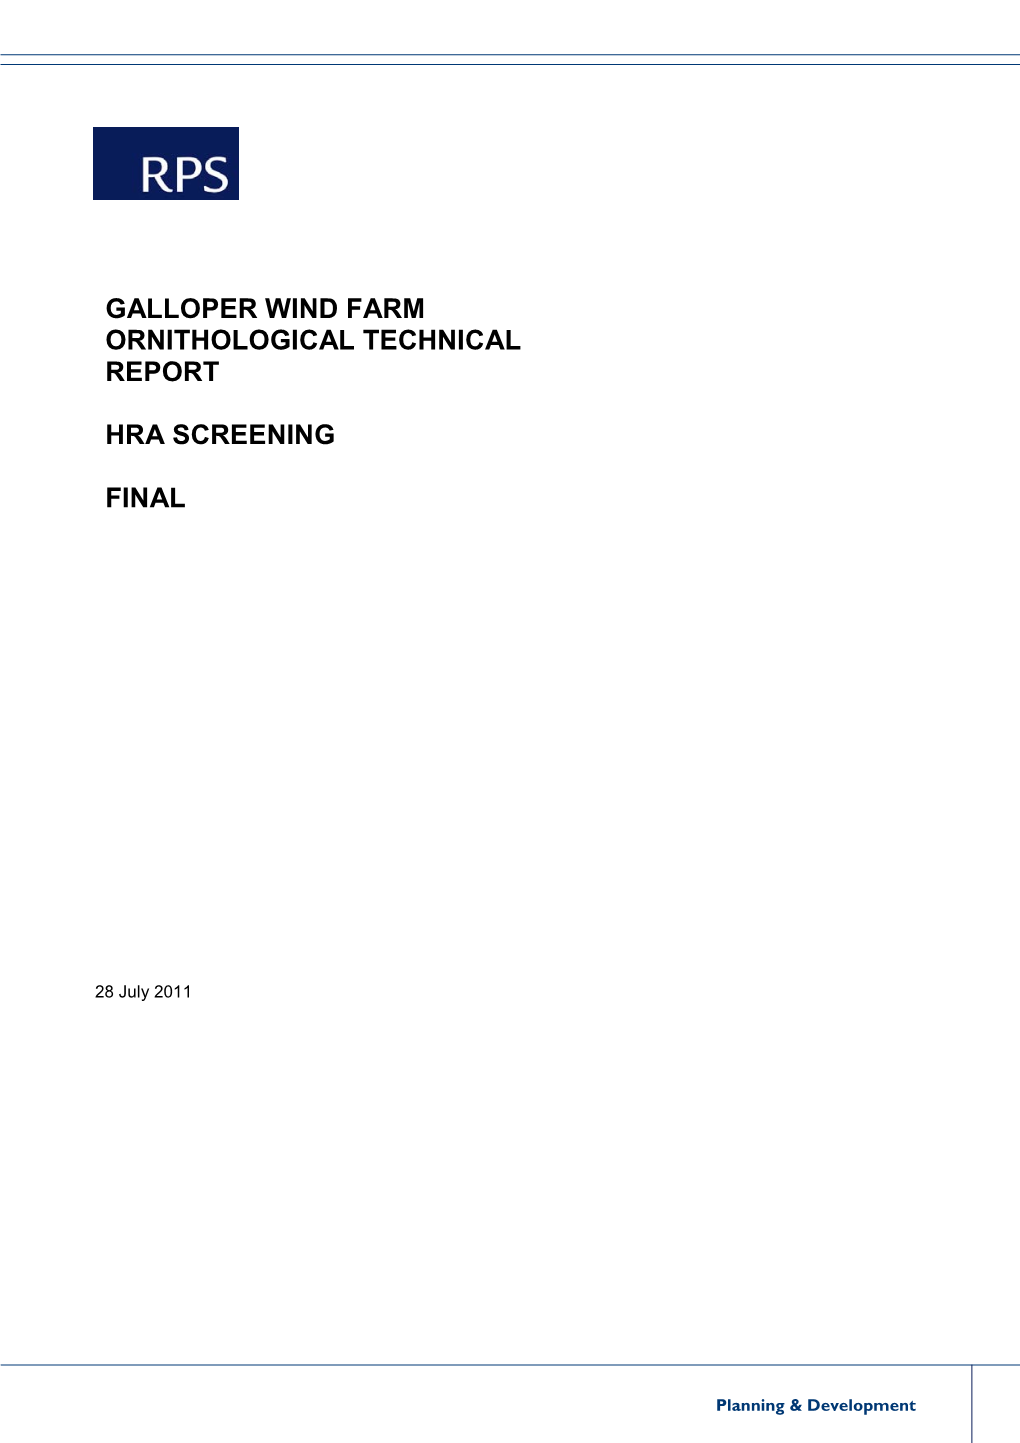 Galloper Wind Farm Ornithological Technical Report